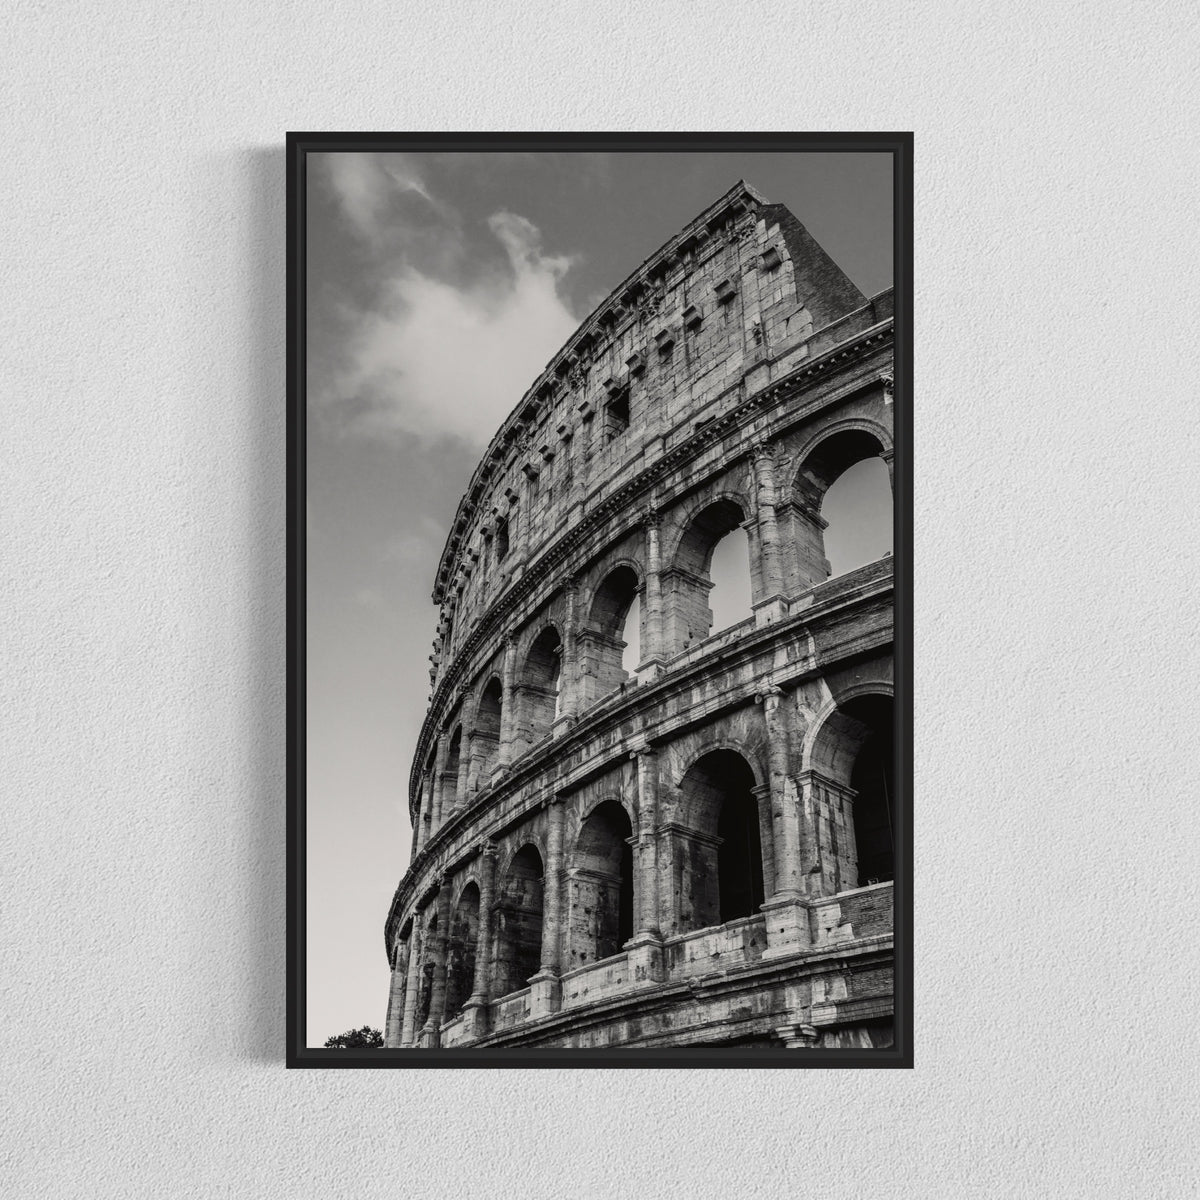 Sight of Colosseum